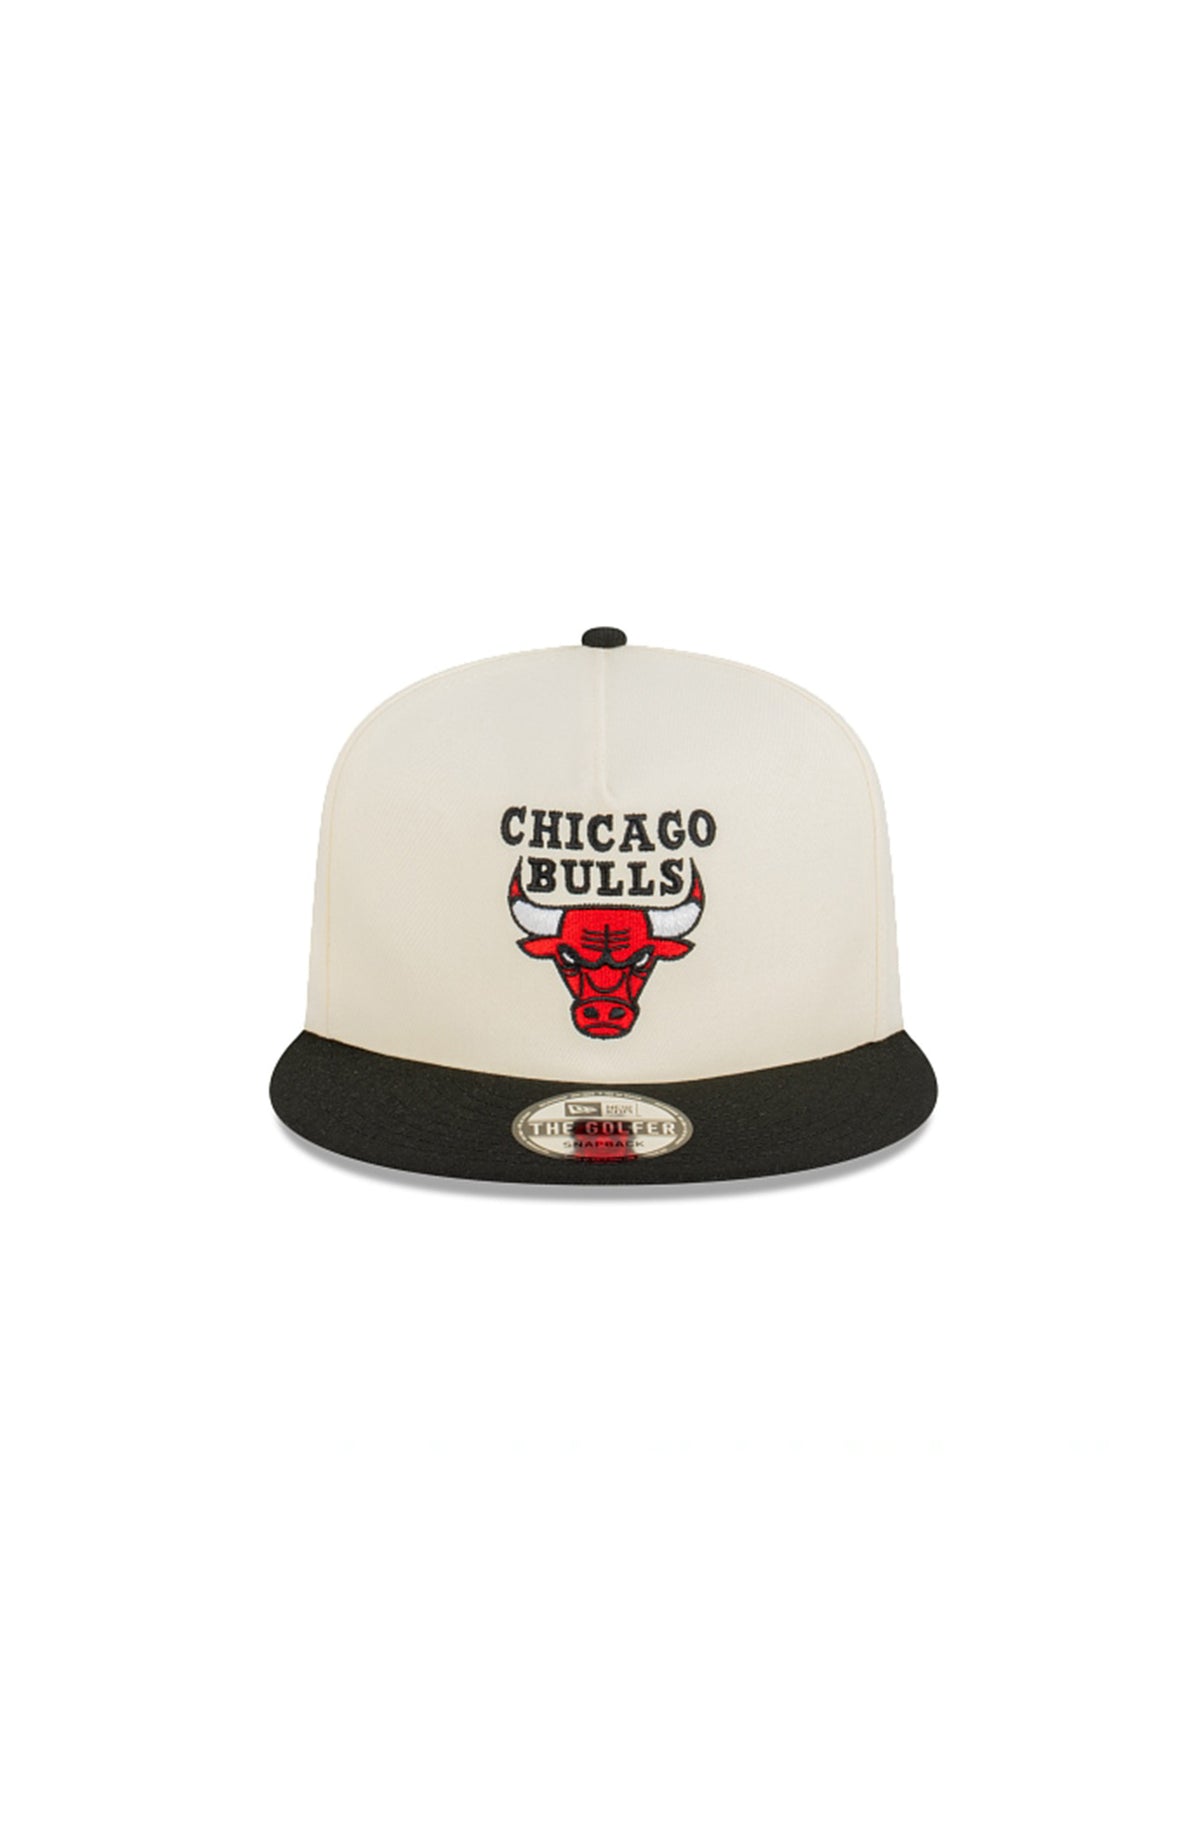 chicago bulls cap white